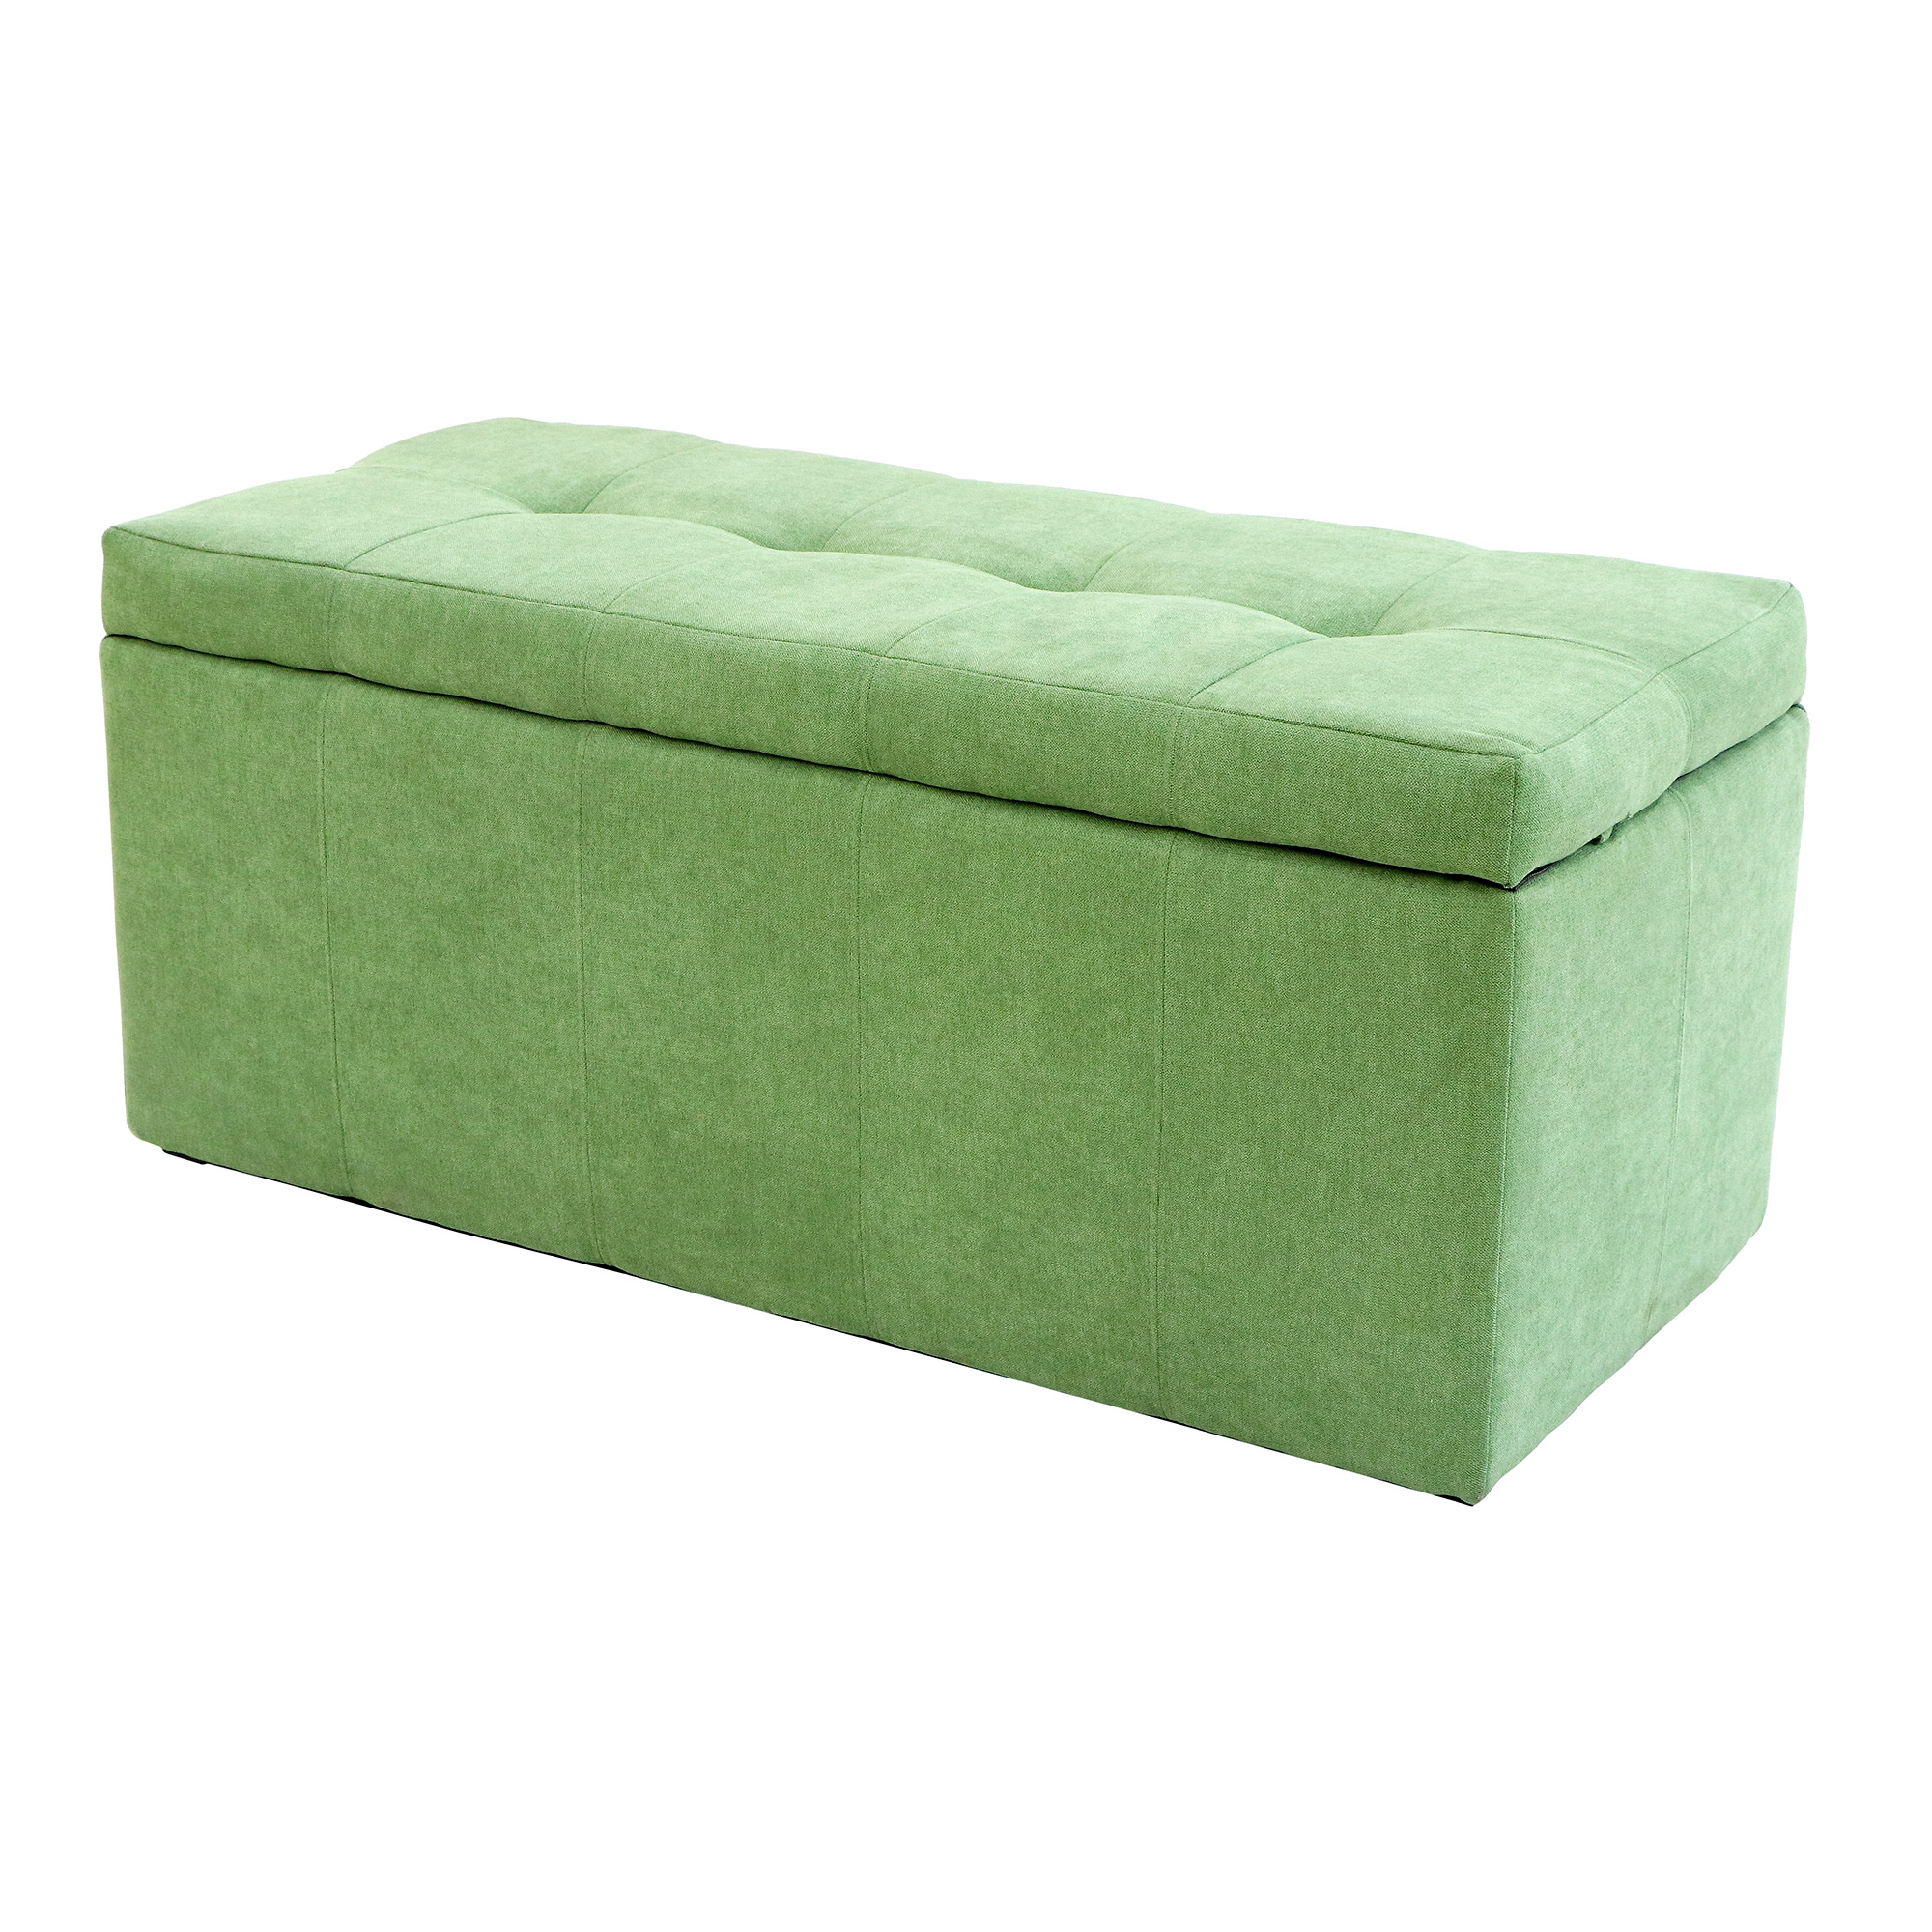 Банкетка Dreambag лонг зеленый велюр 100х46х46, размер 100х46х46 см - фото 1